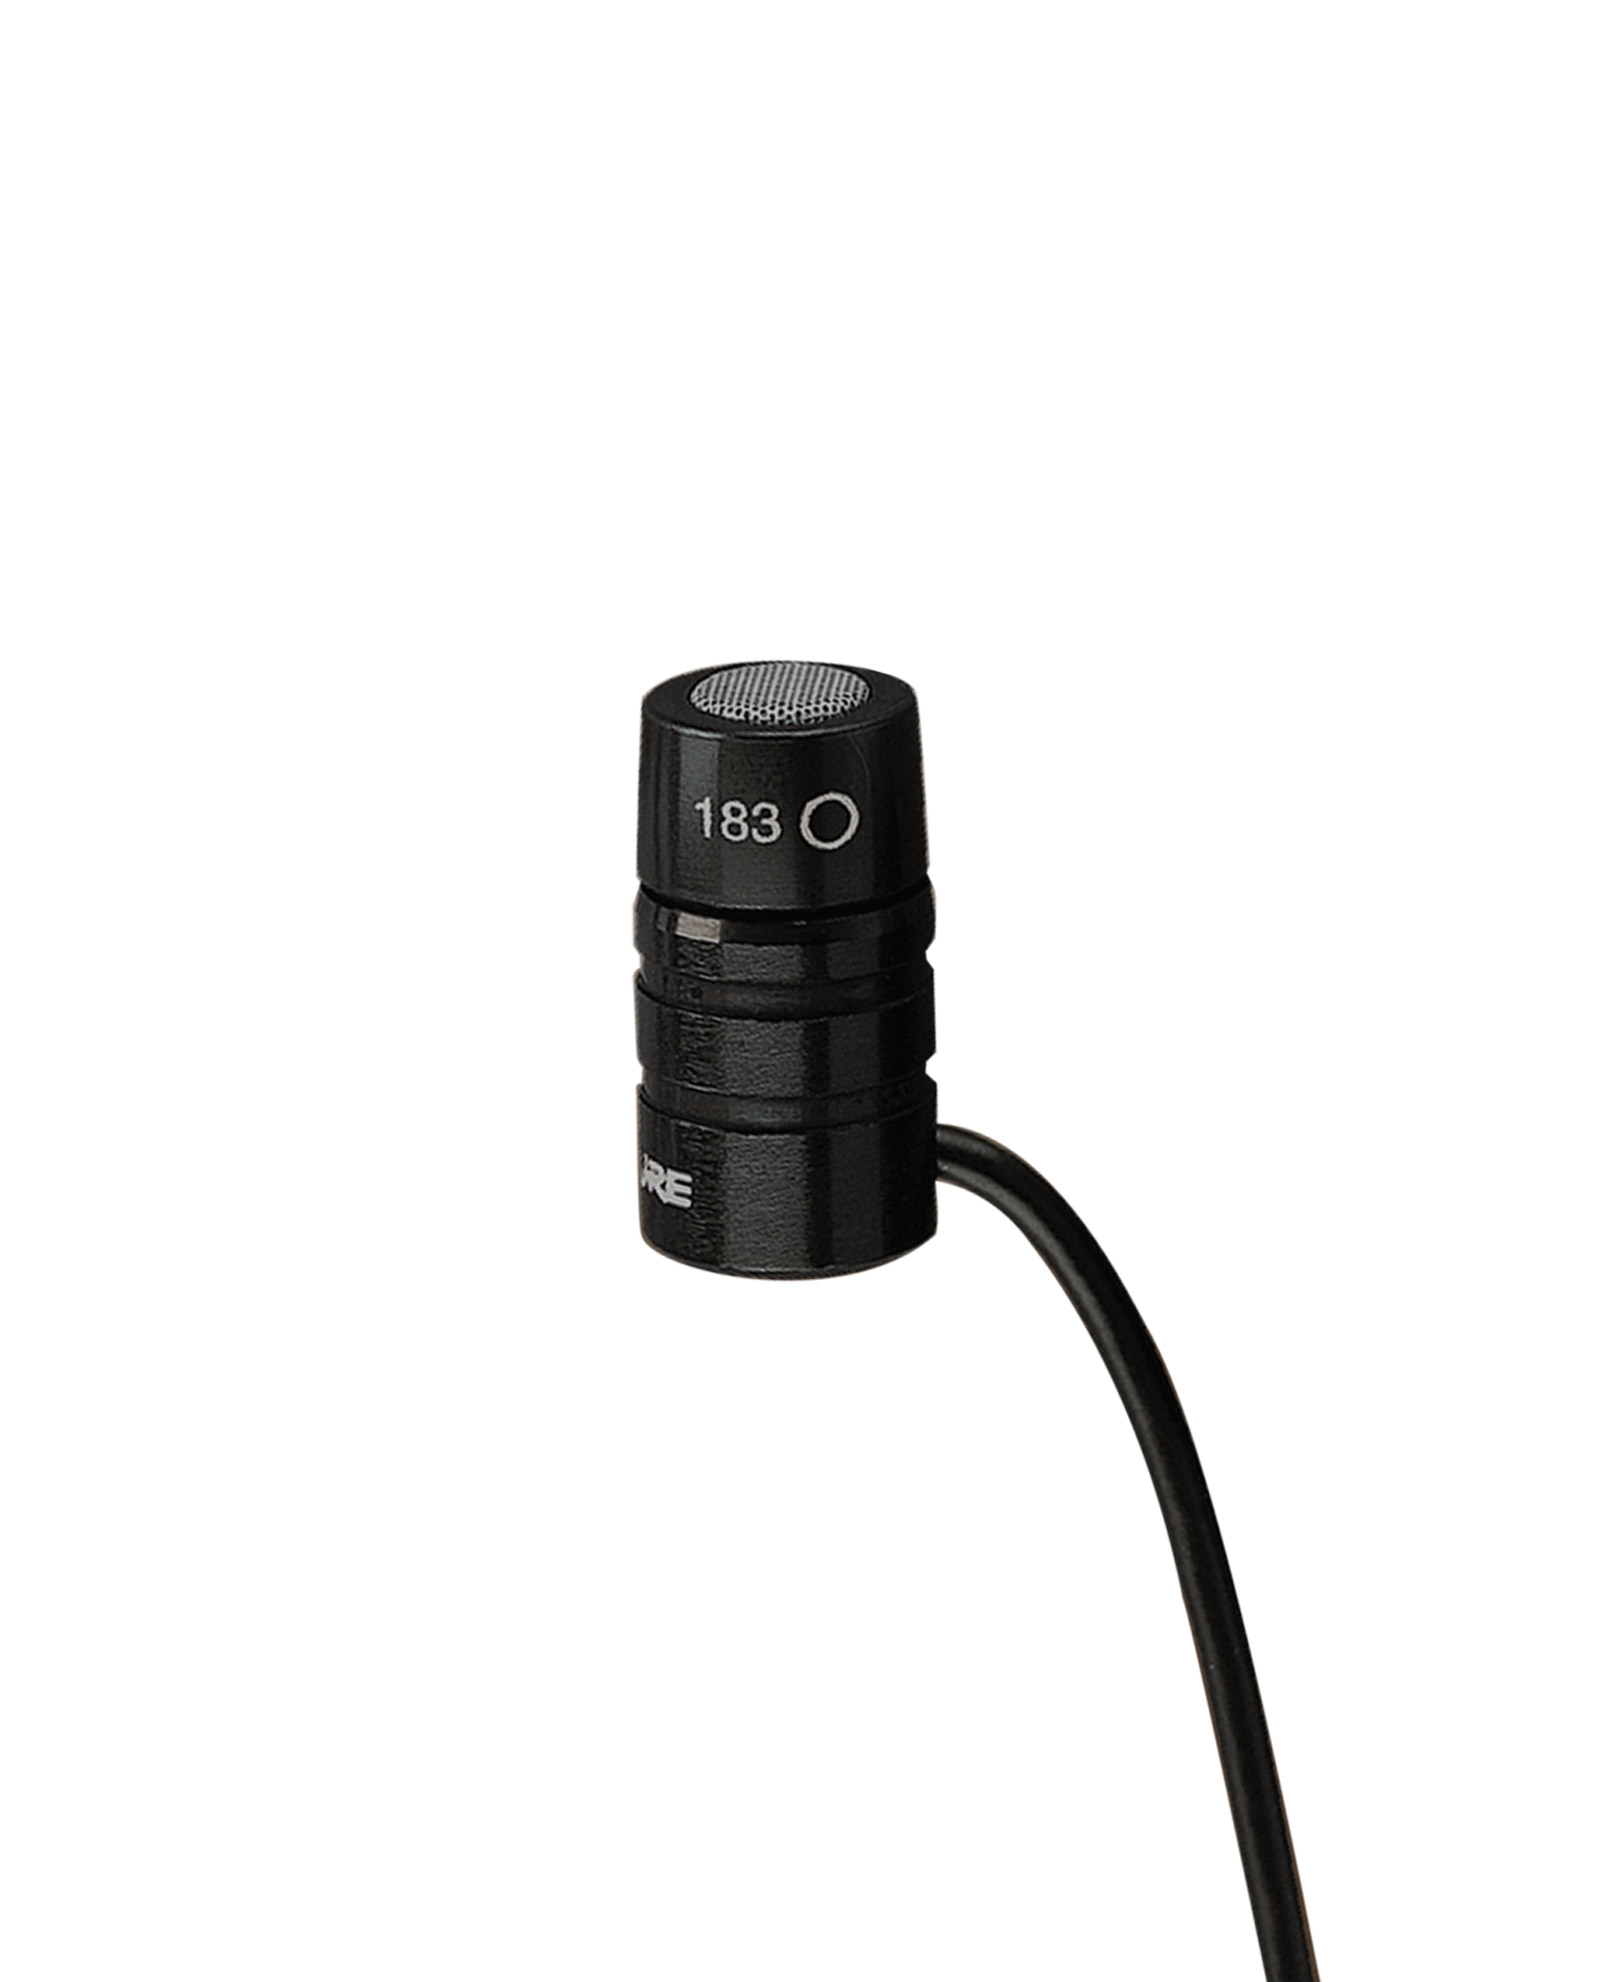 Shure Mx183 Omnidirectional Lavalier Microphone 1